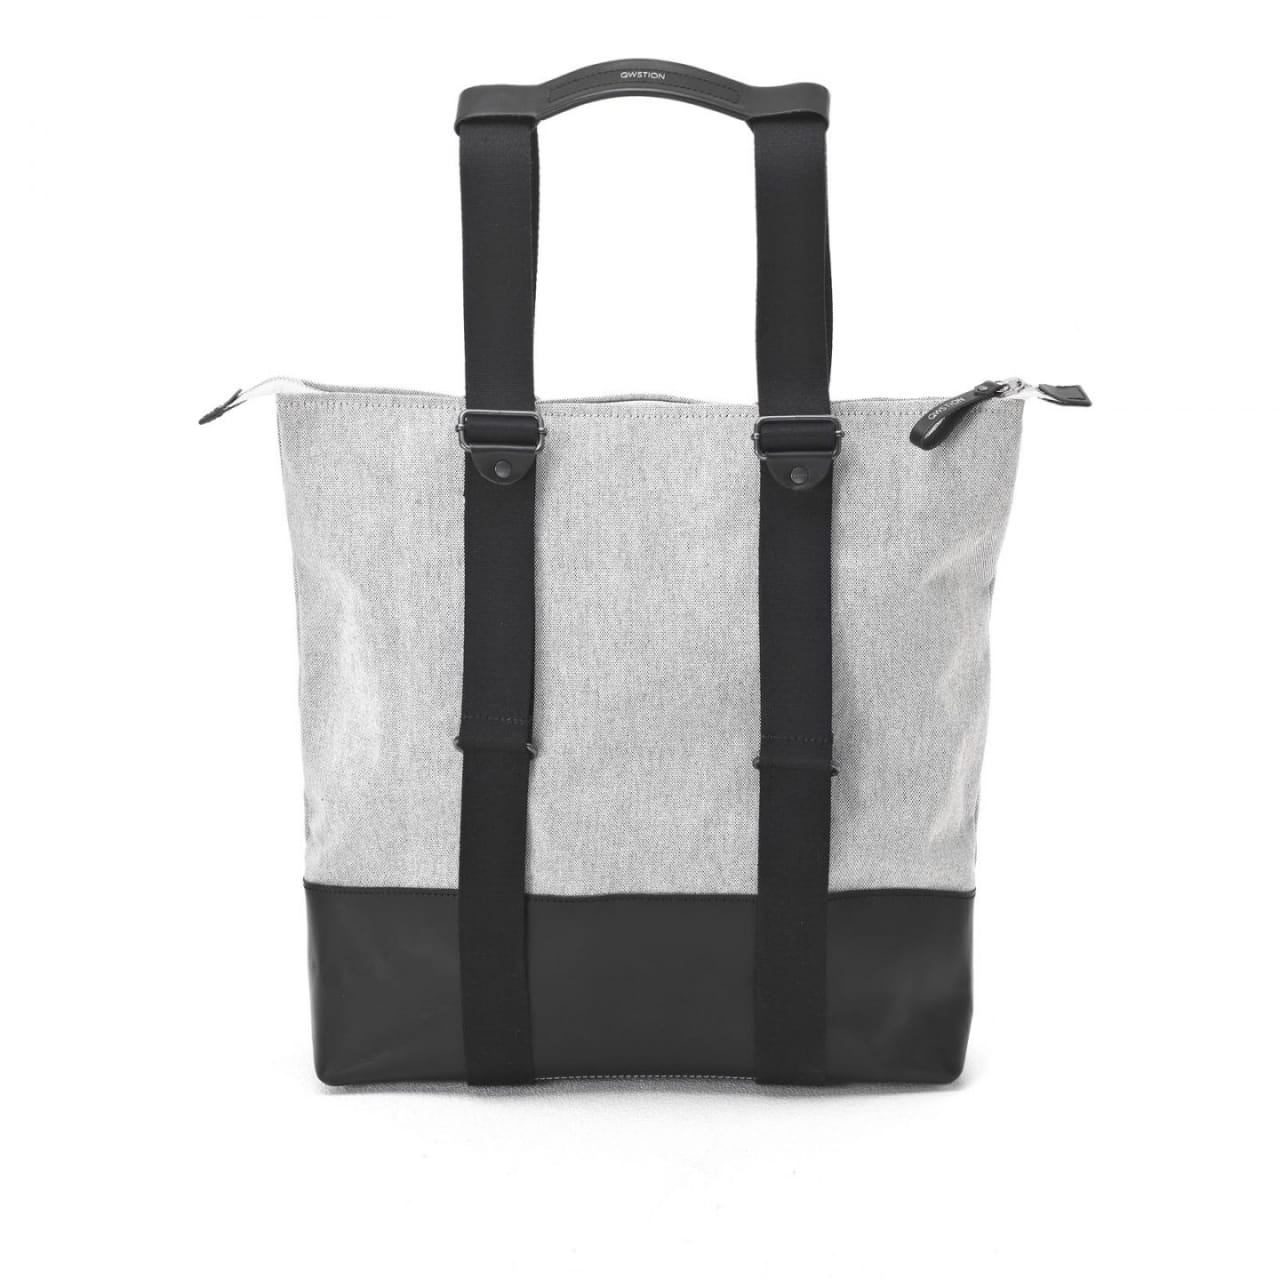 Buy Stylish & Trendy Jute Bags online at Best Price | Myntra